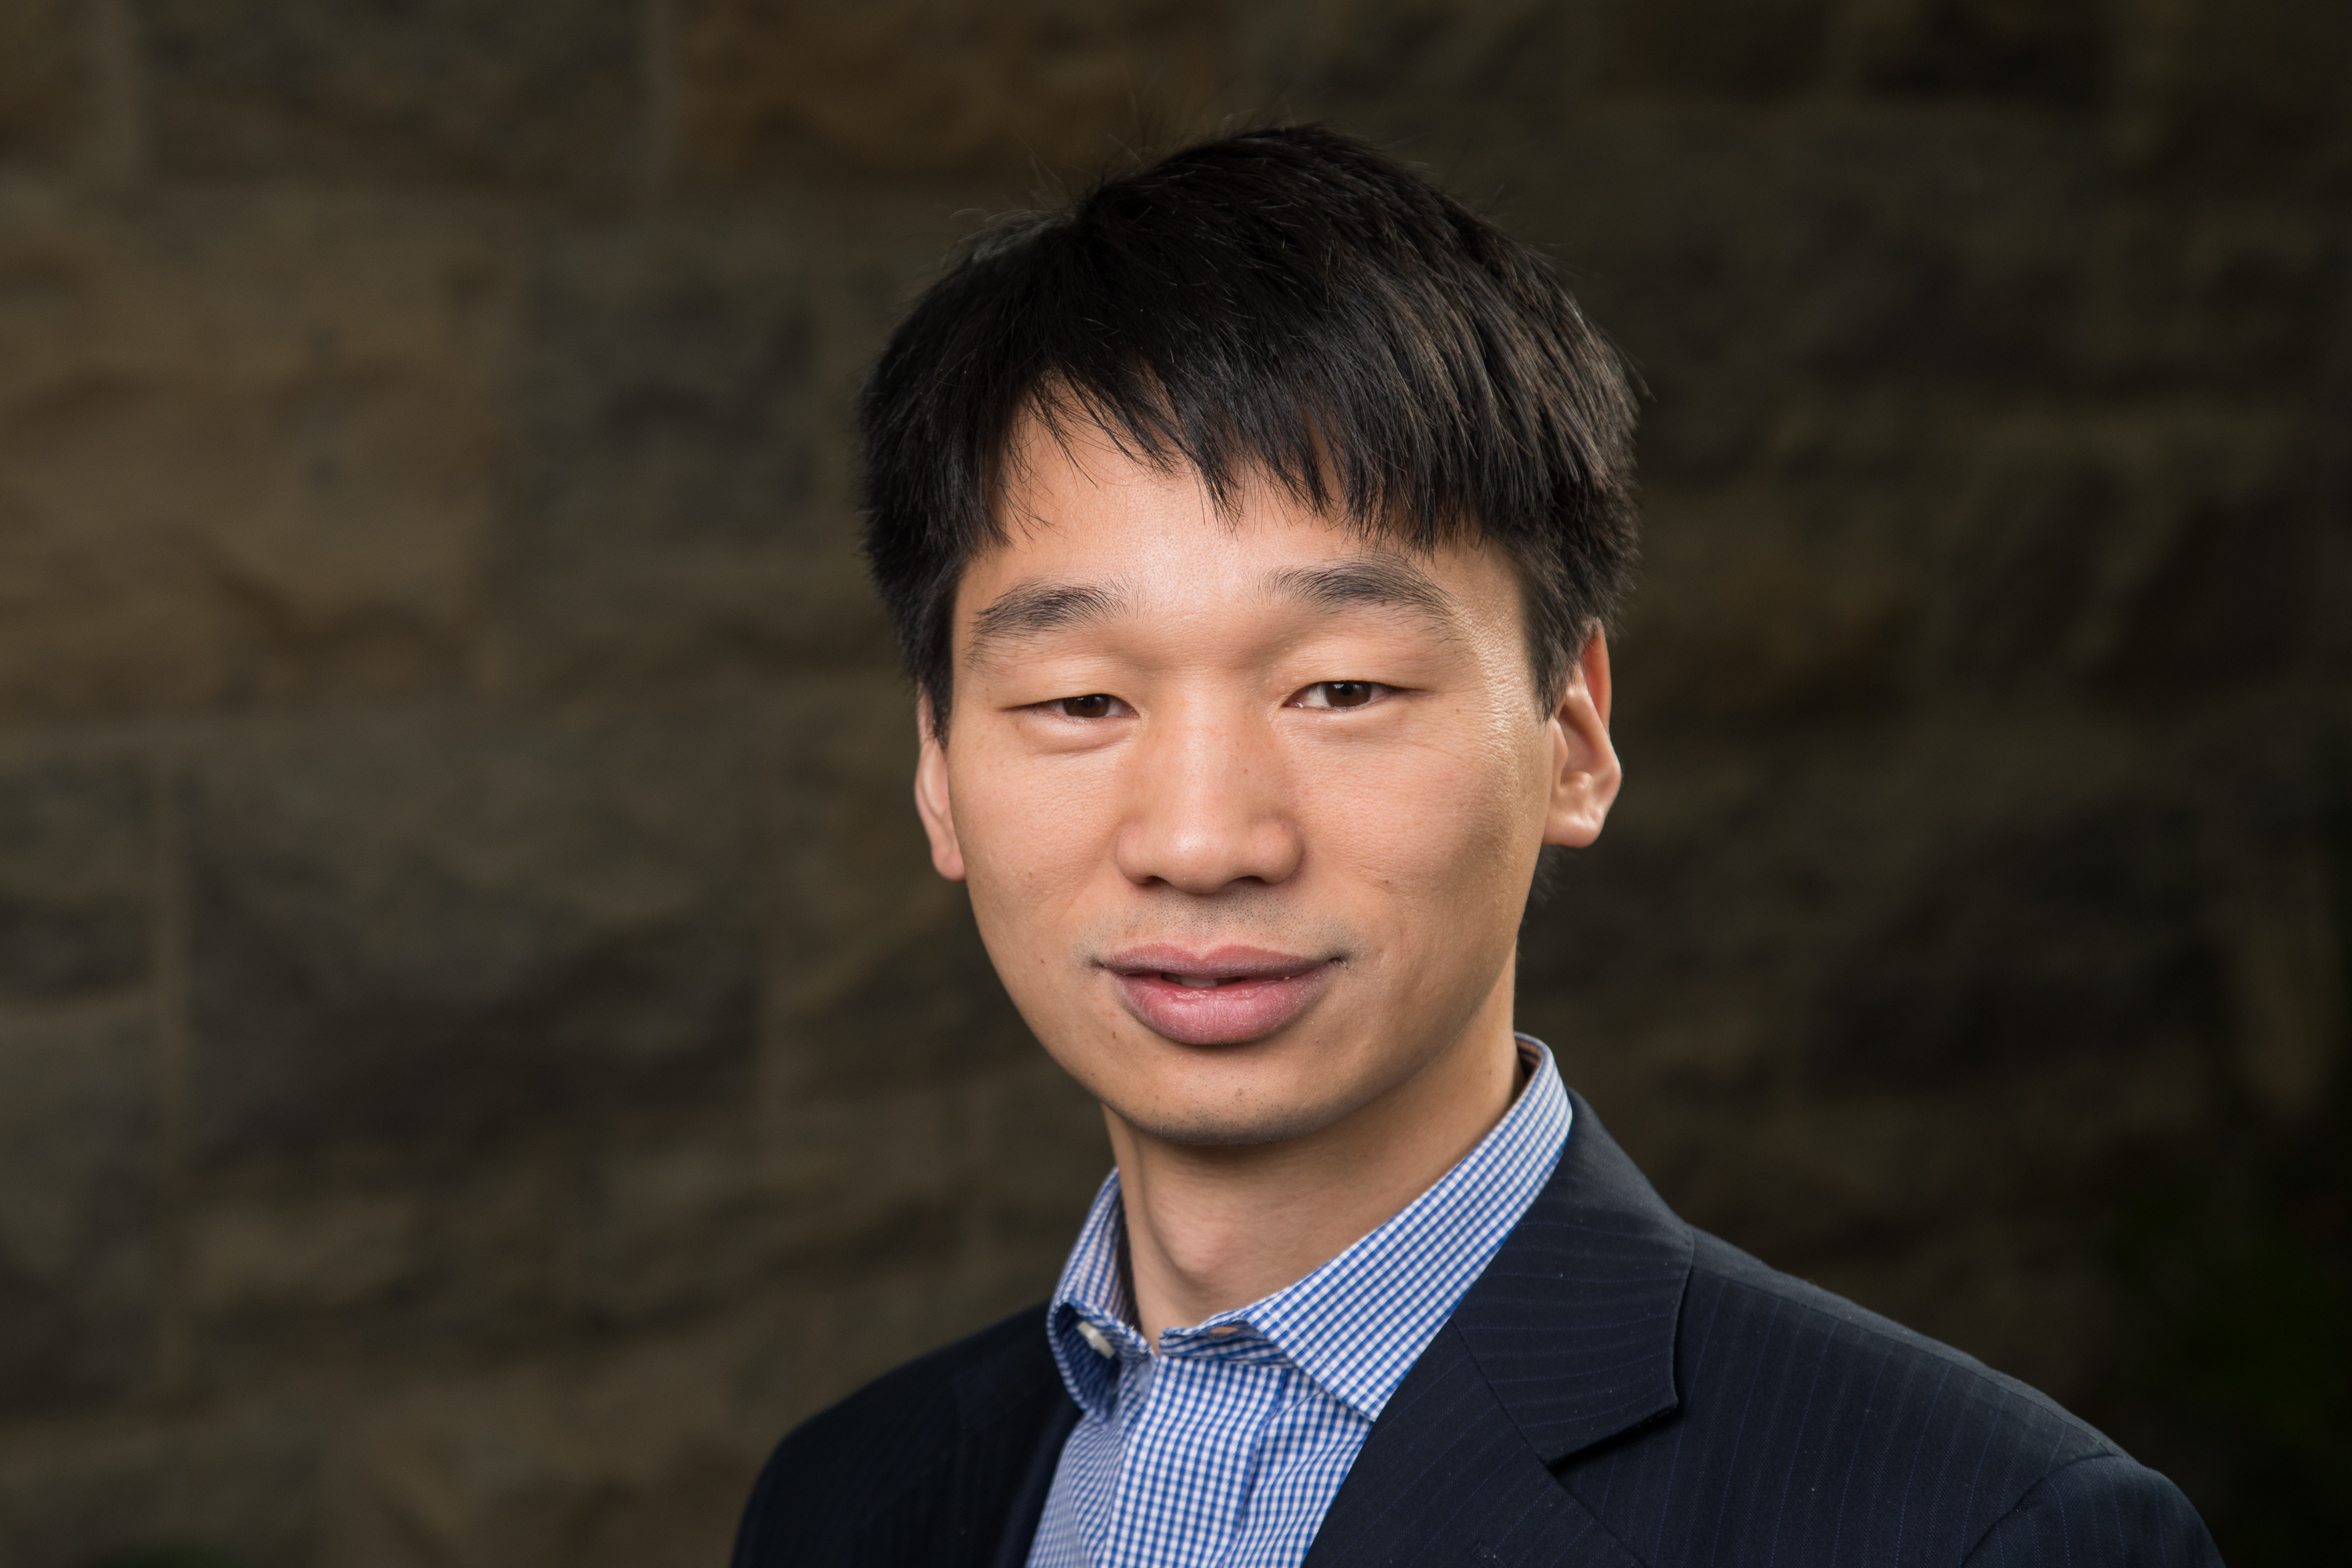 Virginia Tech chemist Guoliang “Greg” Liu stands in front of a Hokie Stone wall, wearing a blazer and dress shirt.